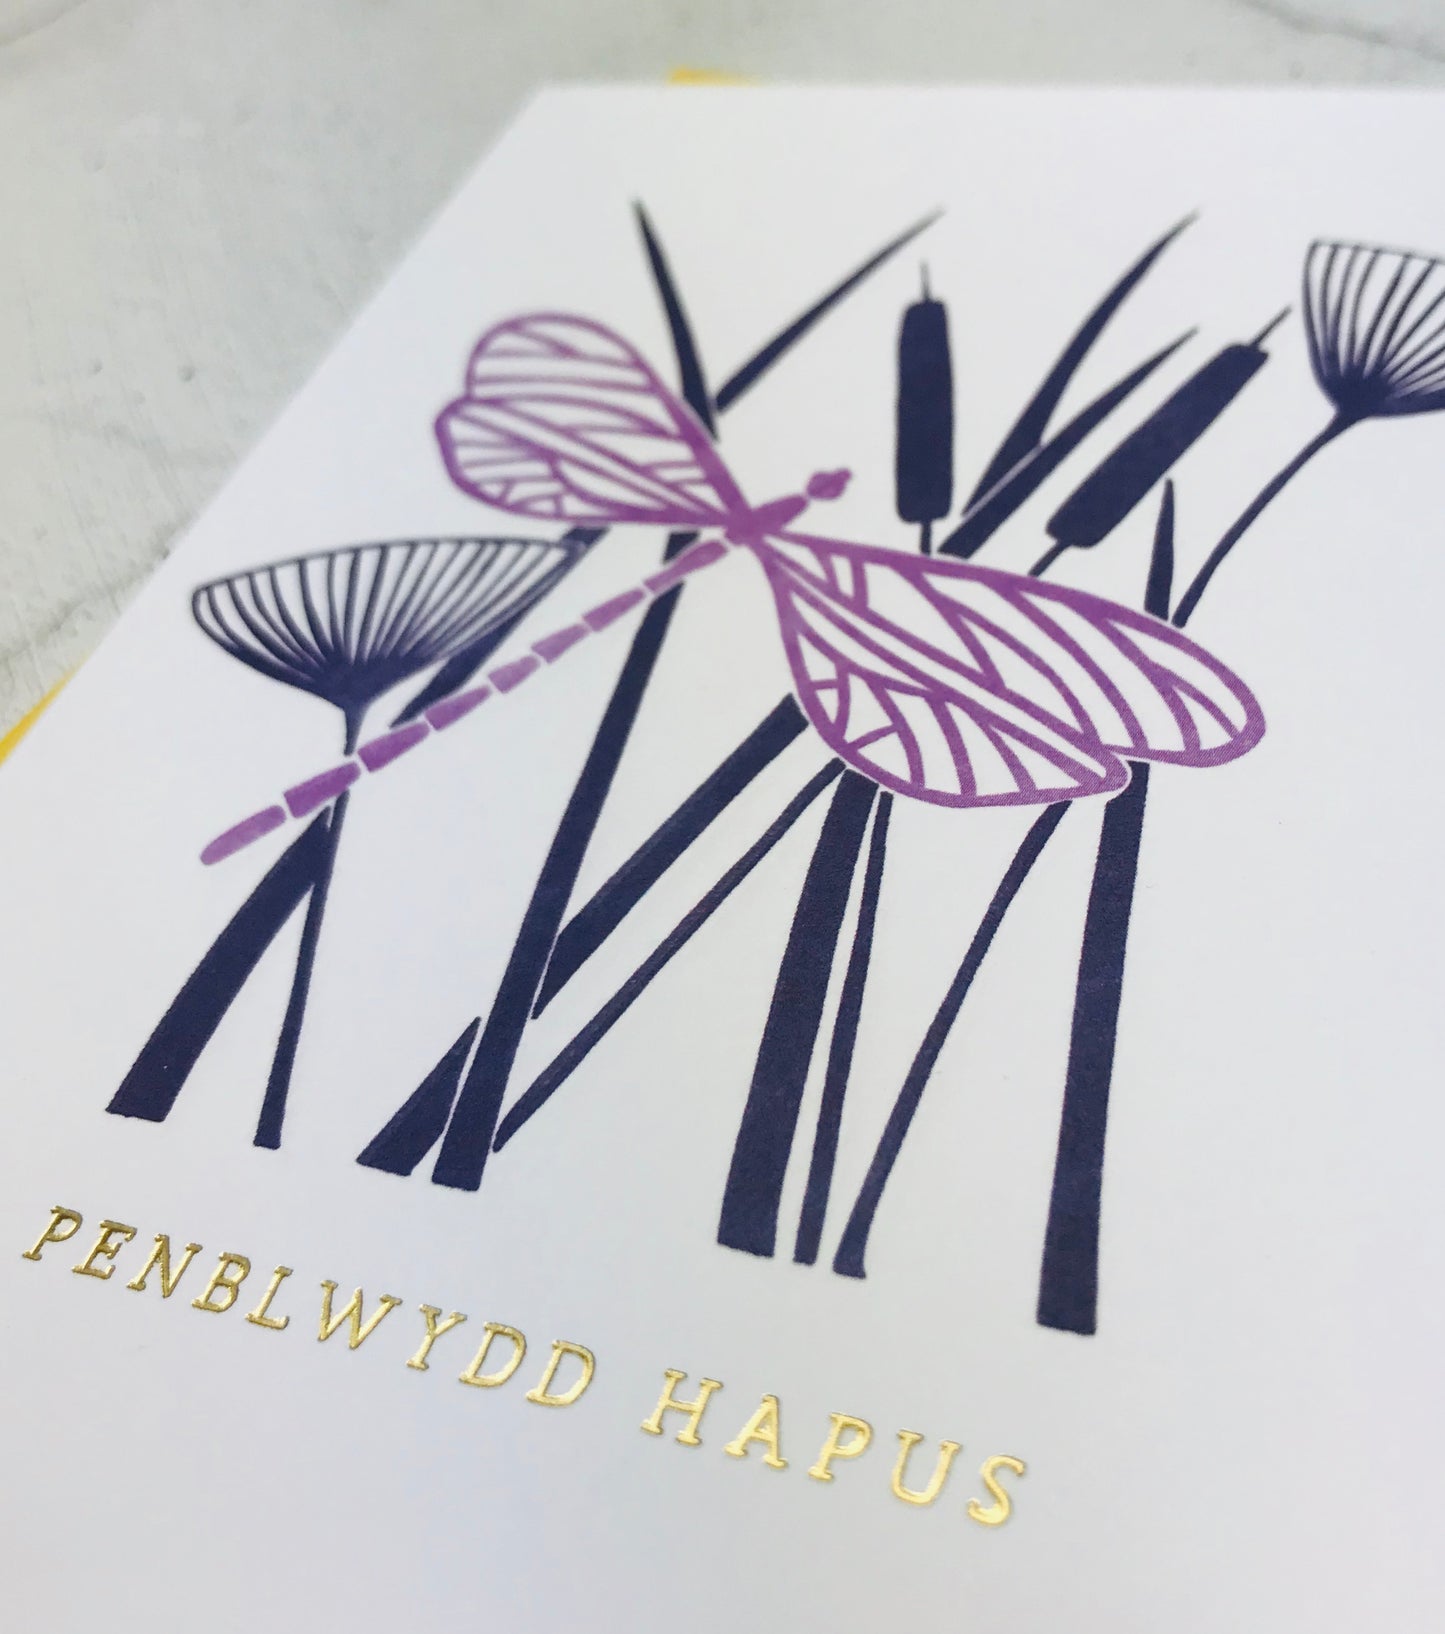 Embossed Penblwydd Hapus Dragonfly Card